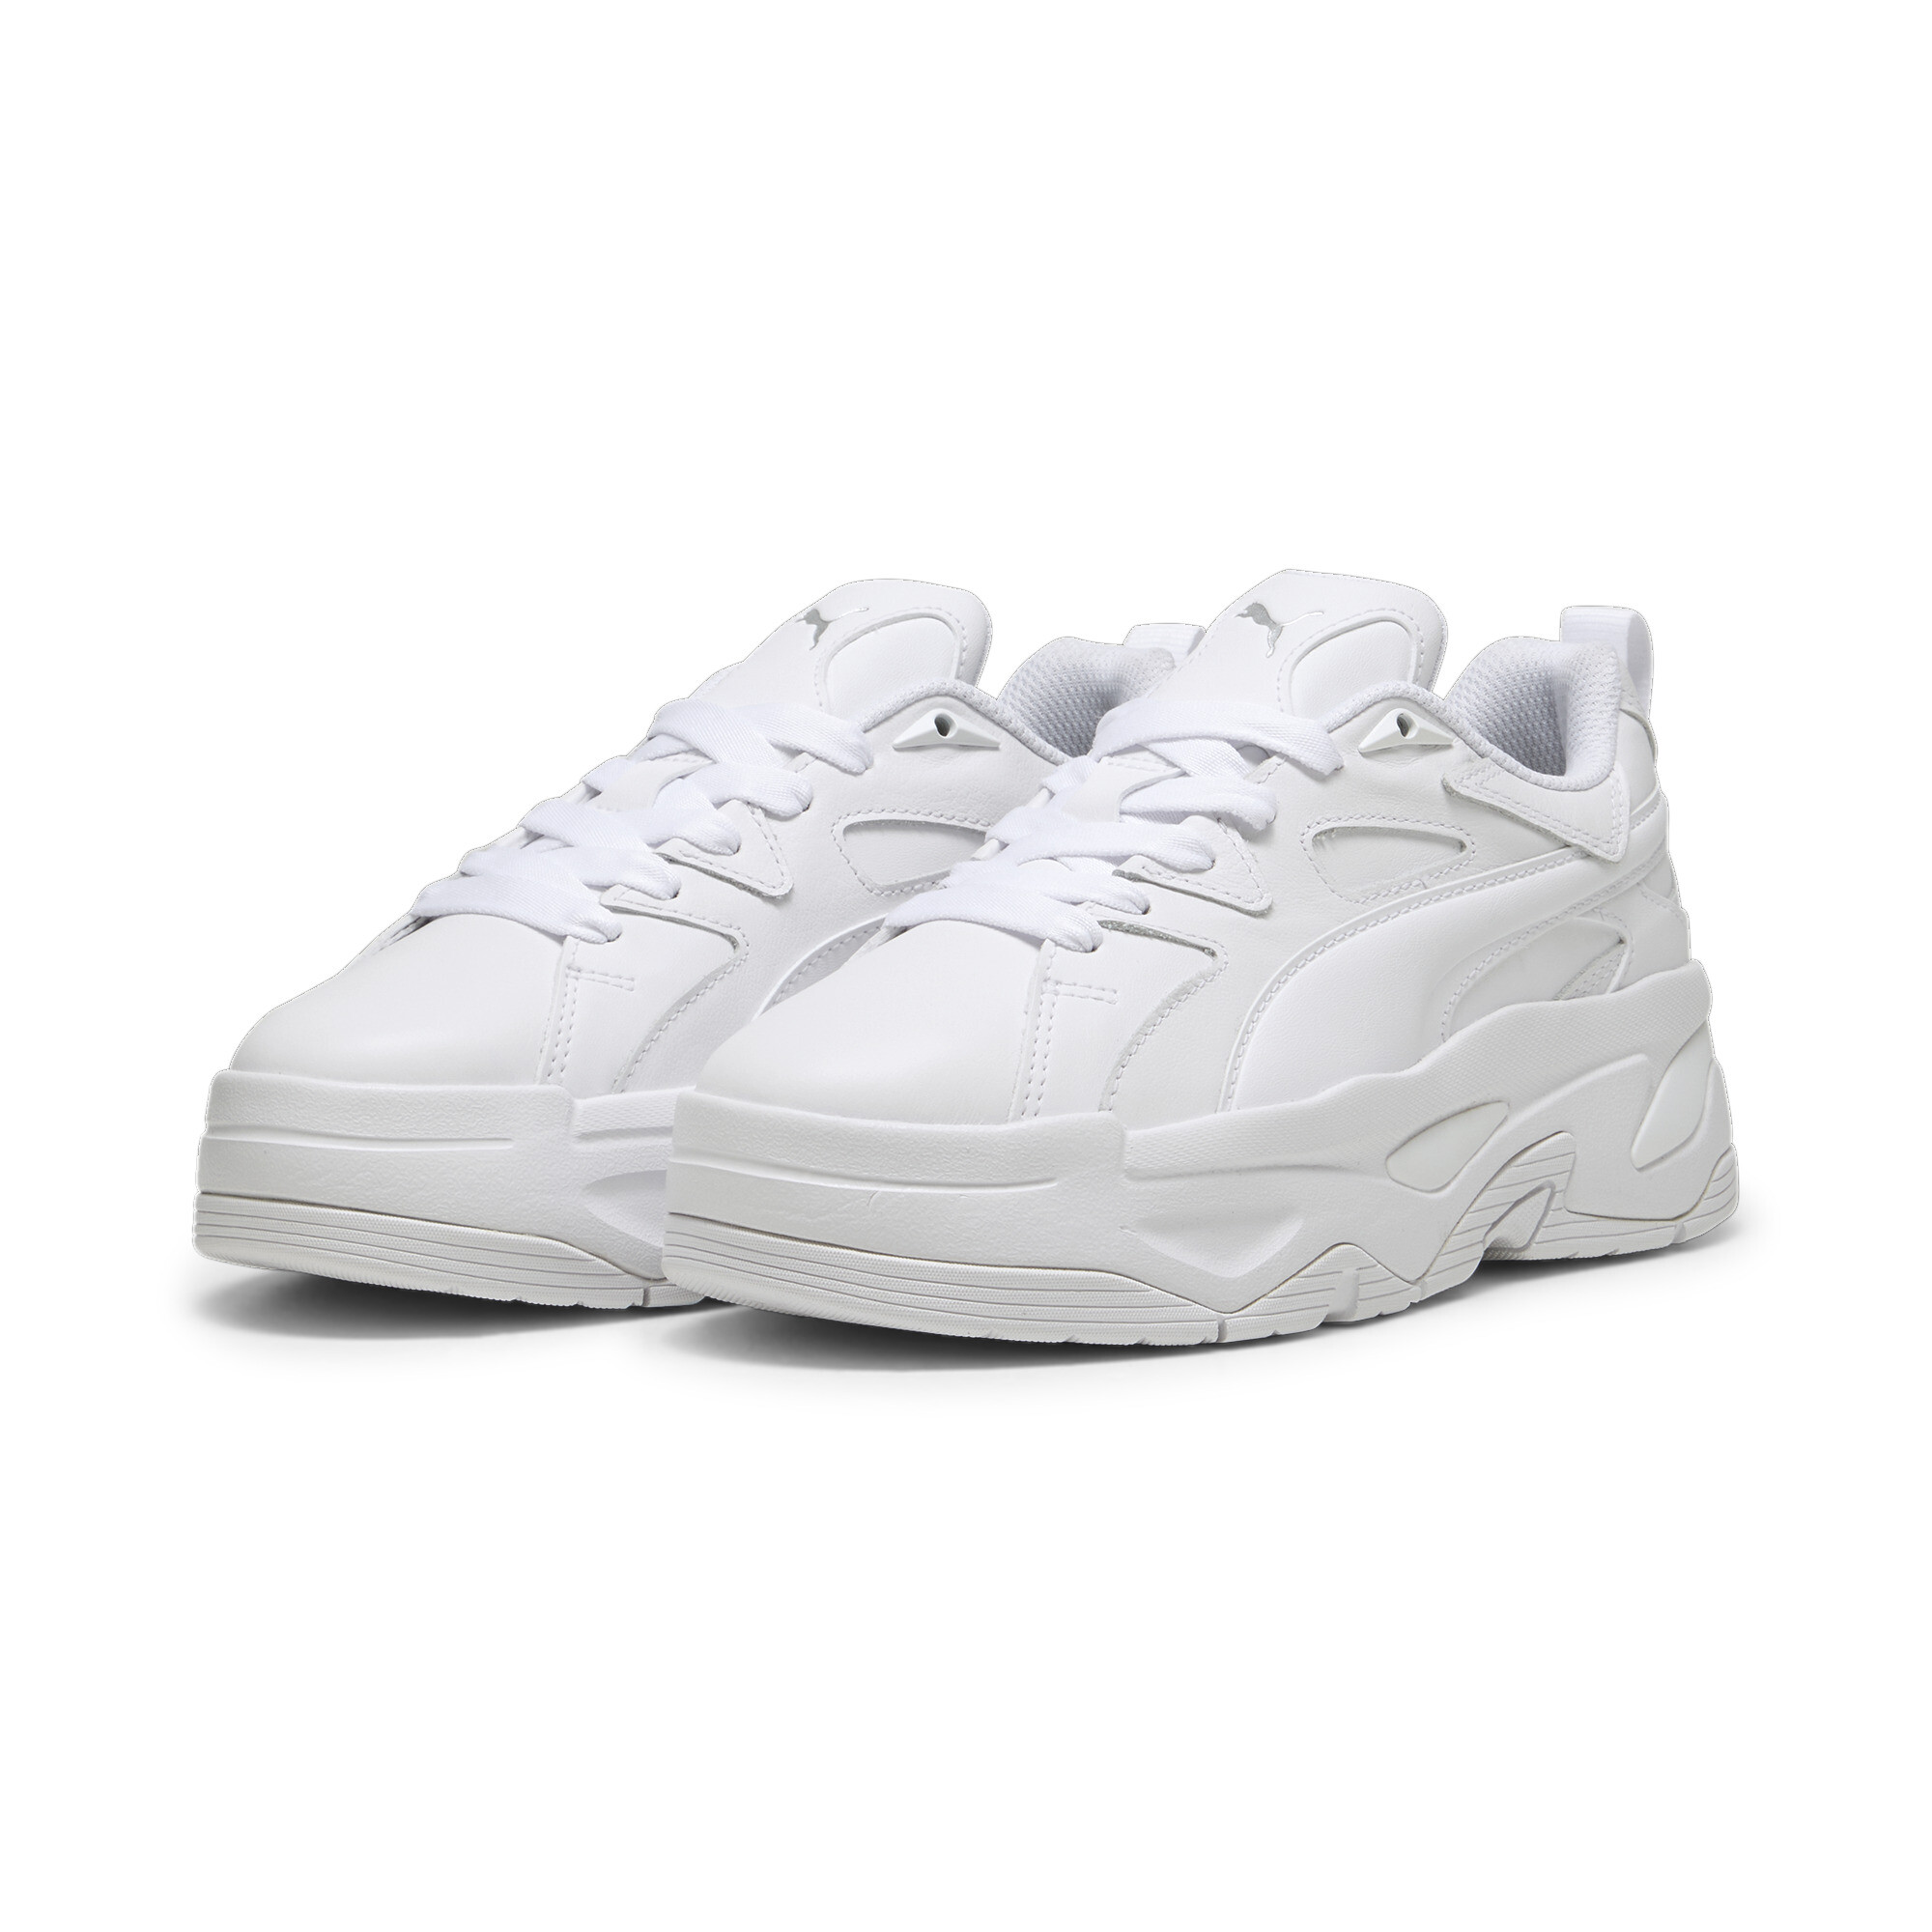 Women's Puma BLSTR Dresscode's Sneakers, White, Size 38.5, Shoes